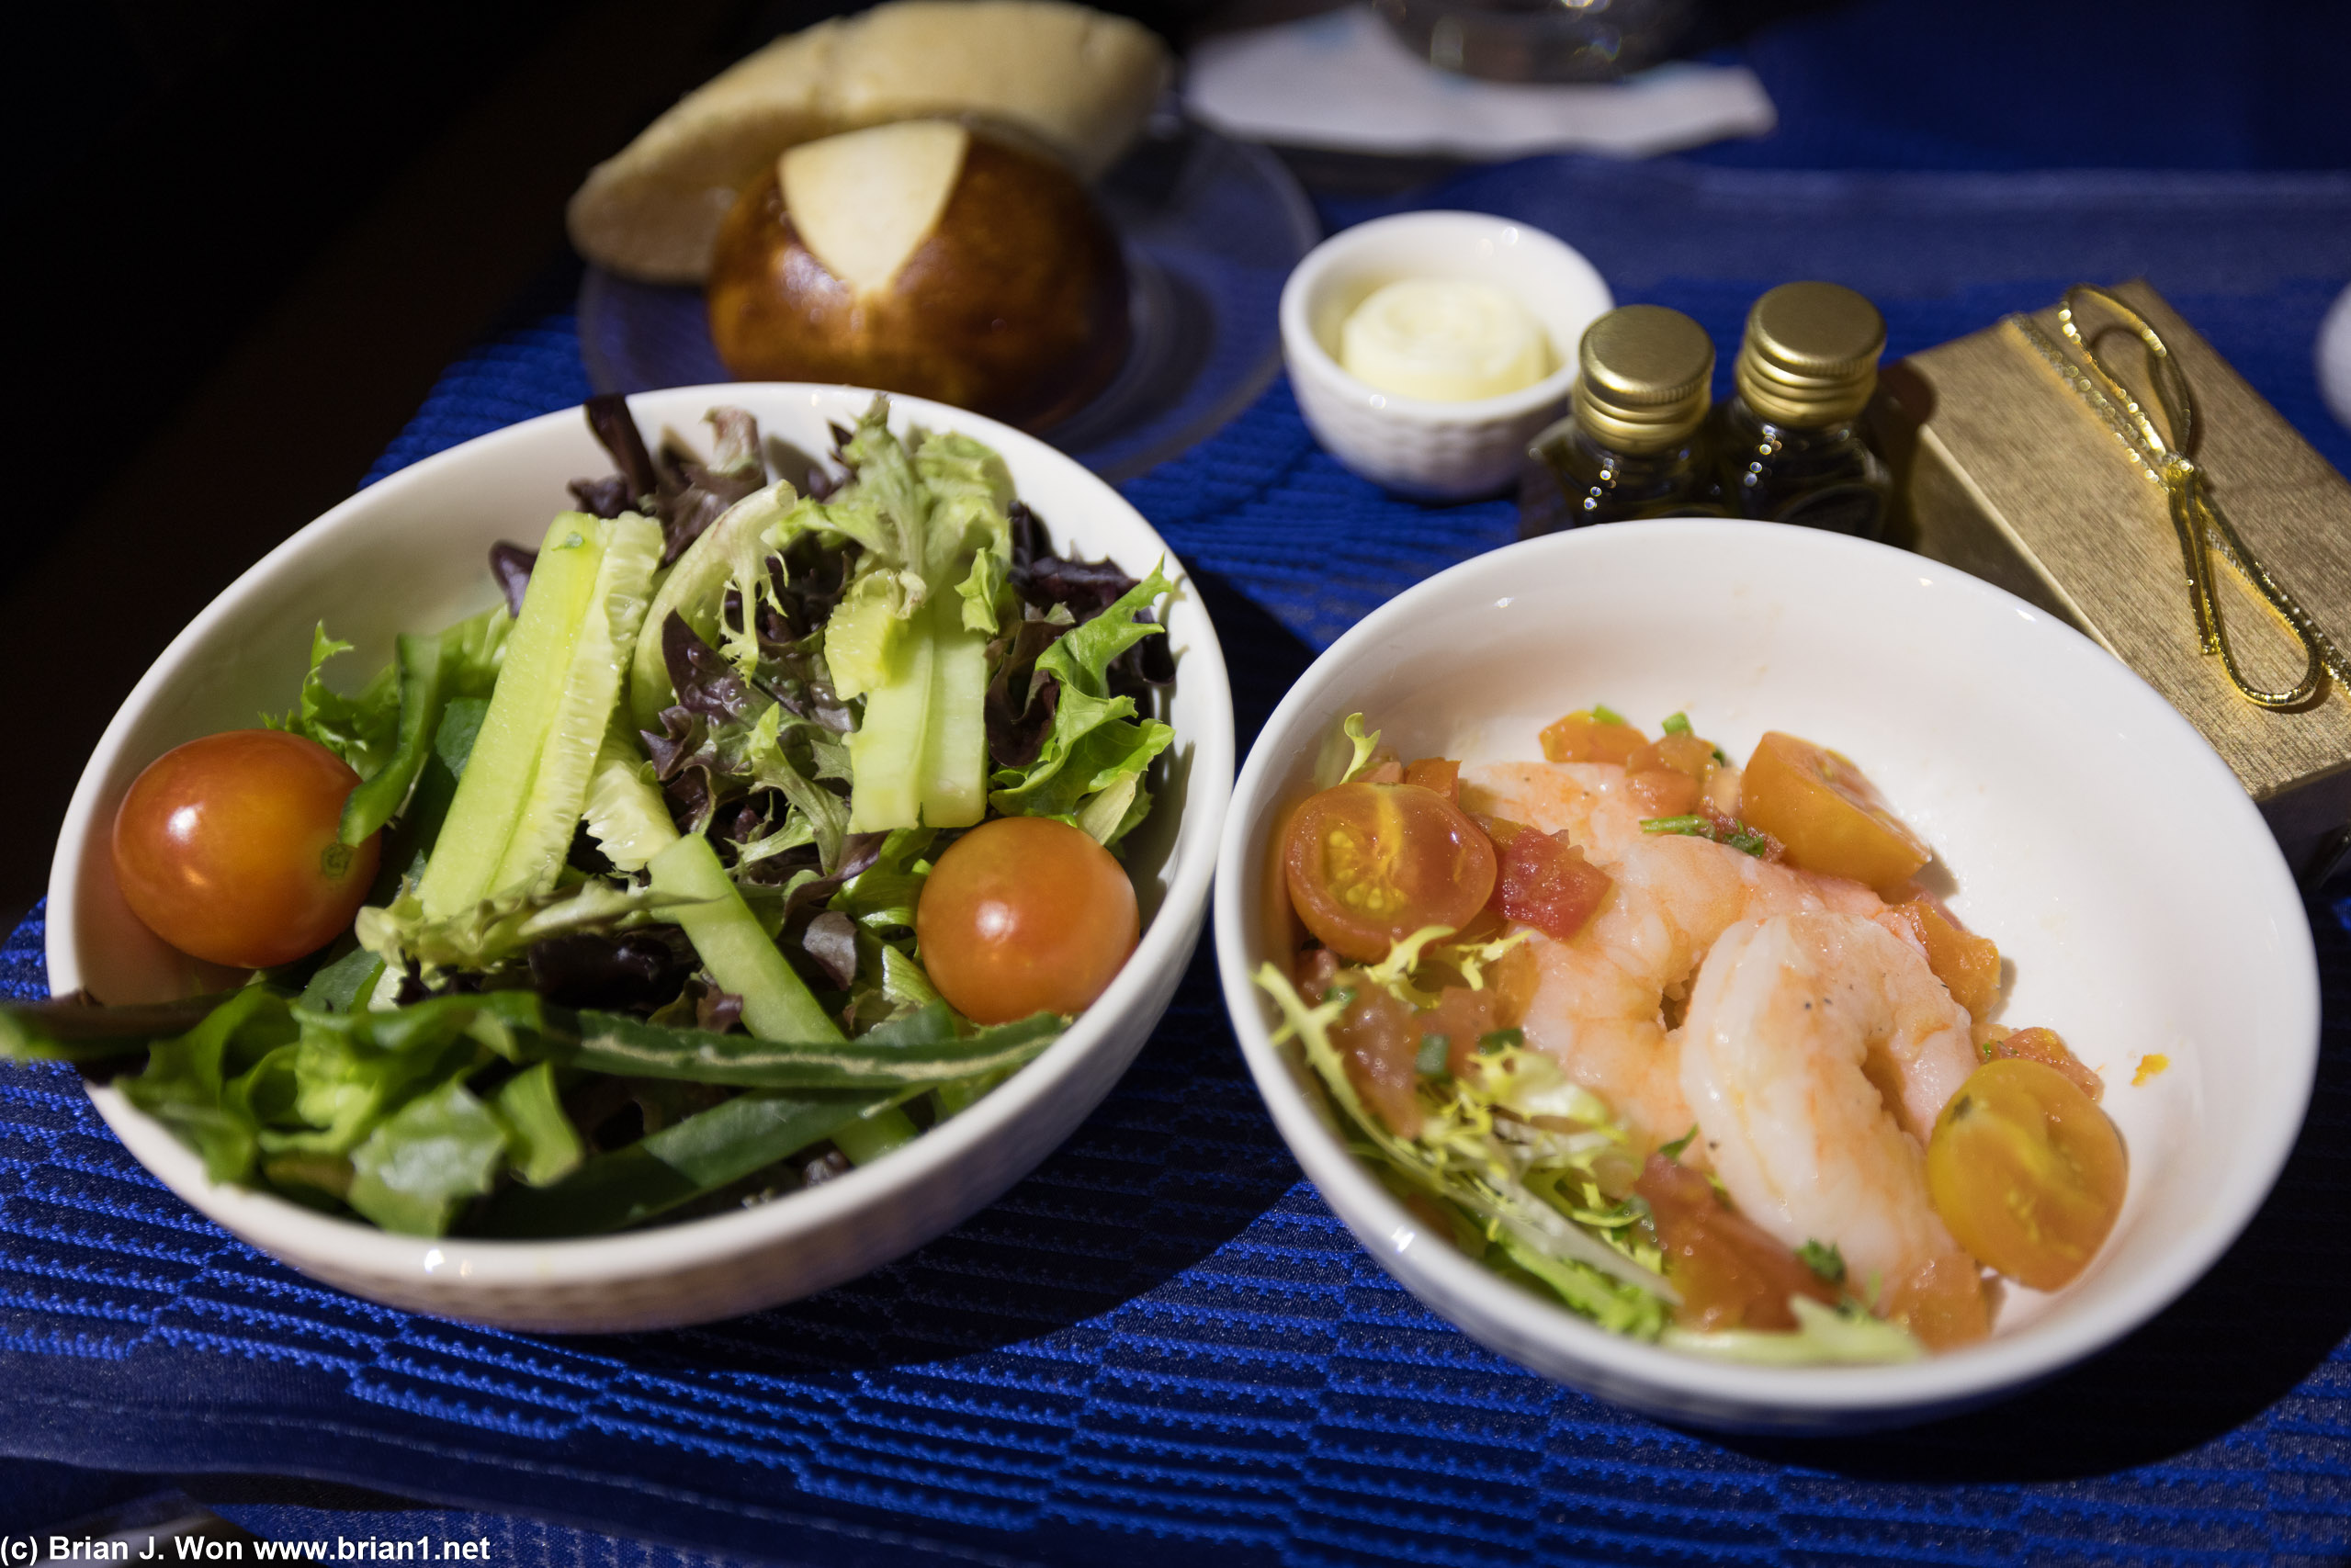 Shrimp was not bad, salad was a real salad.